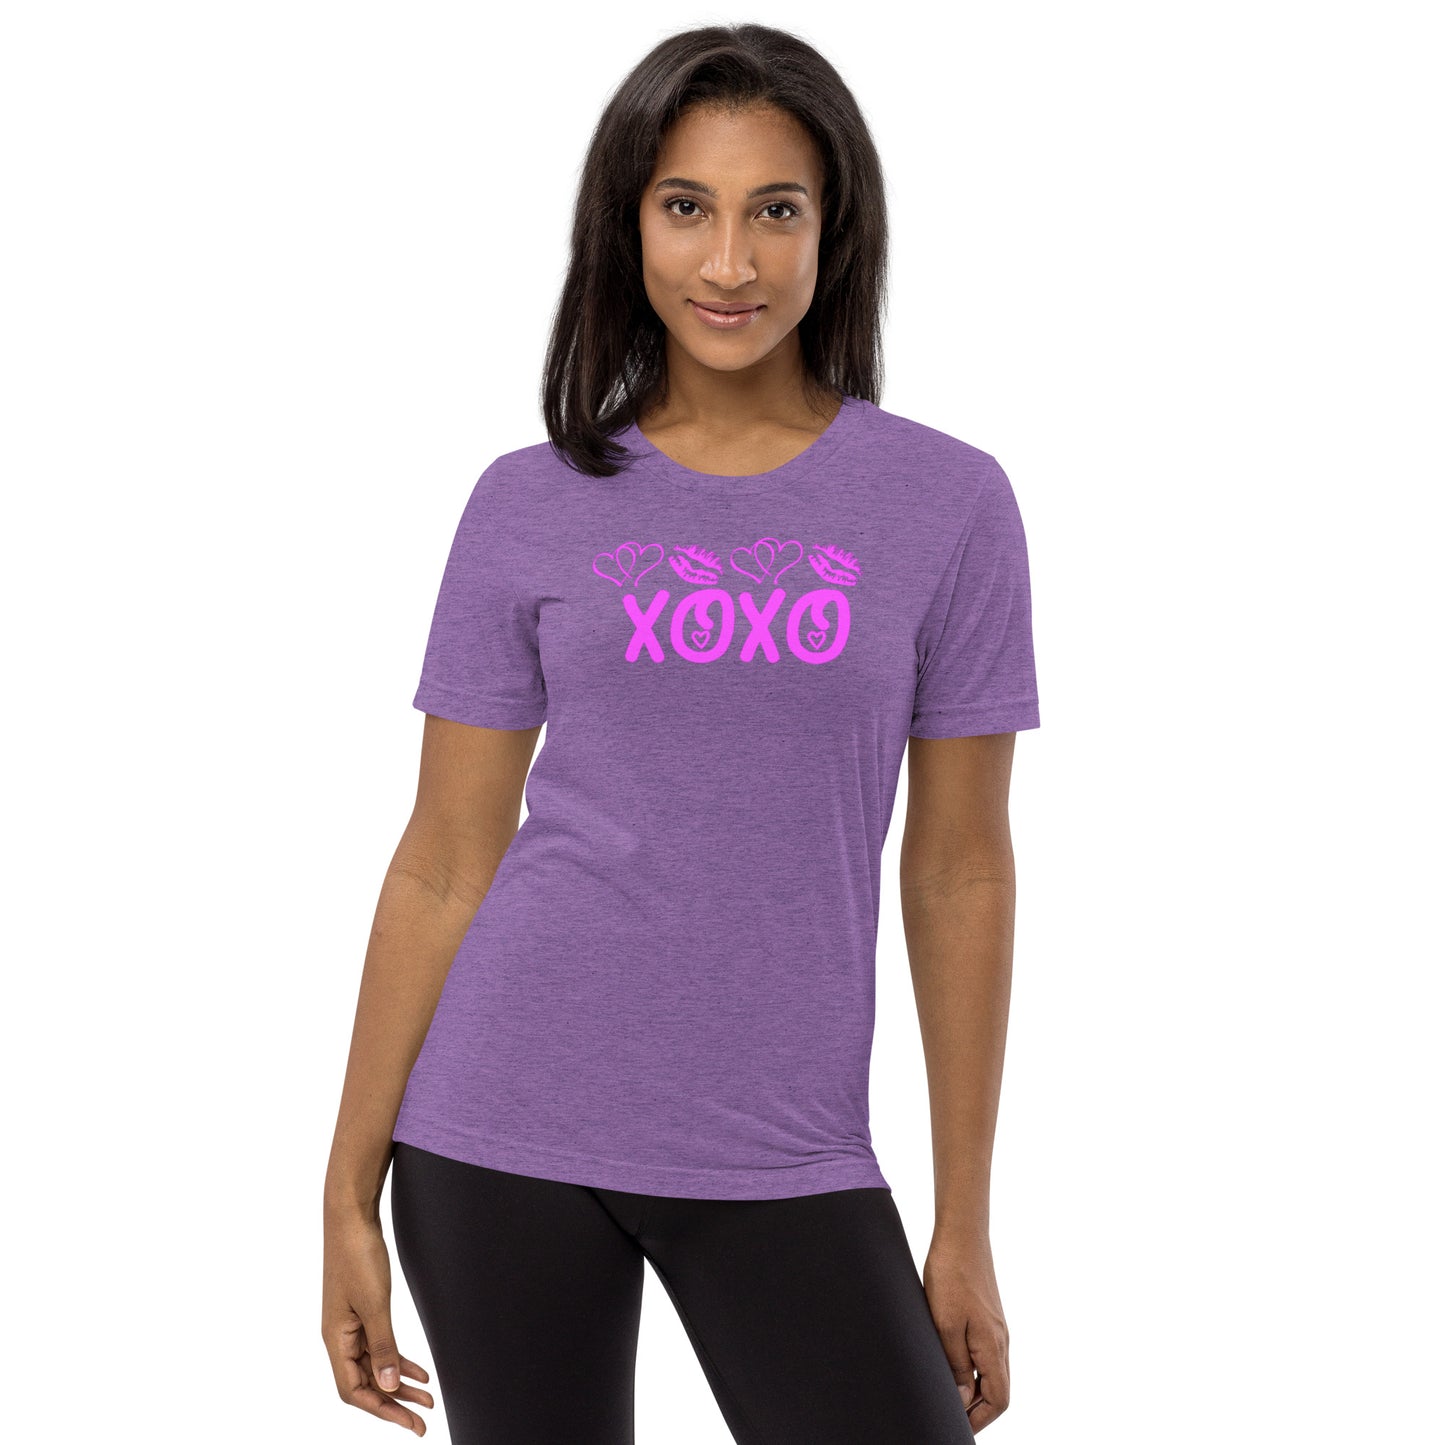 "XOXO" Short sleeve t-shirt